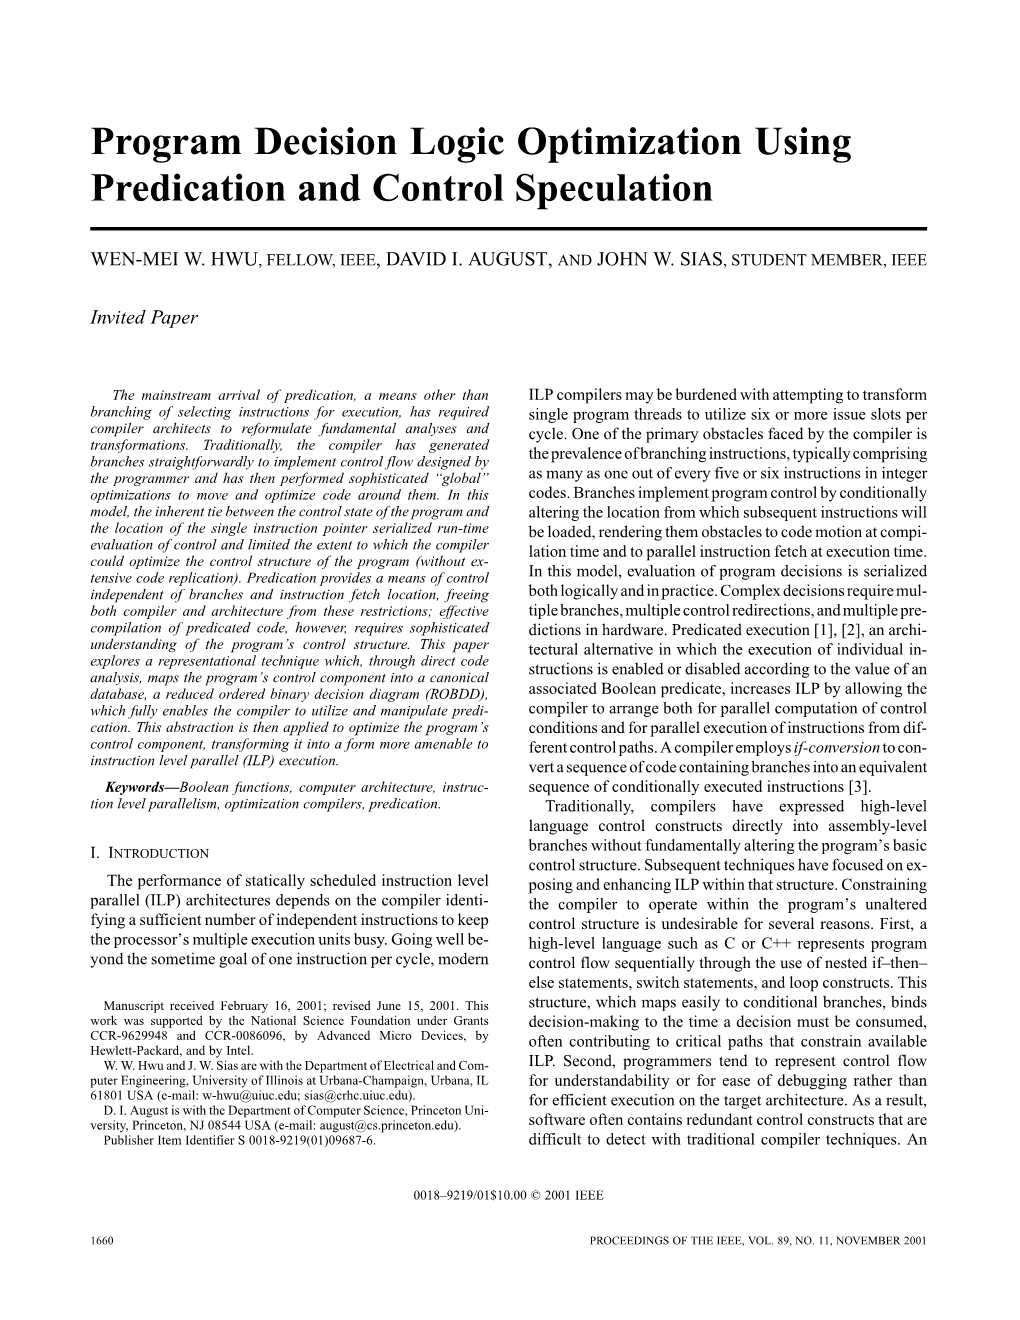 Program Decision Logic Optimization Using Predication and Control Speculation